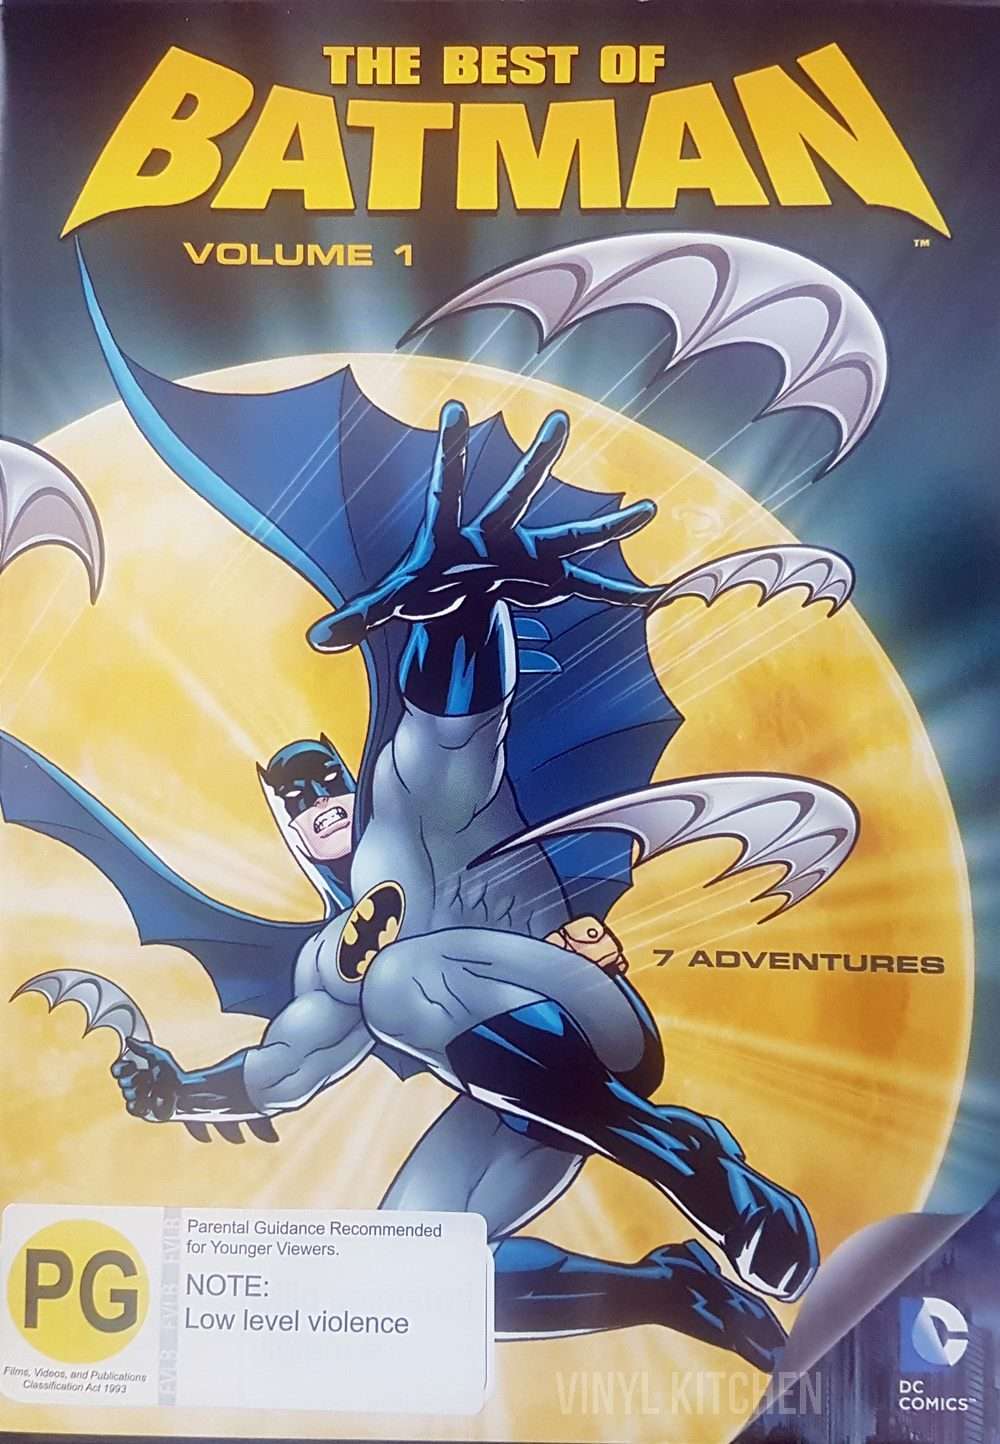 The Best of Batman - Volume 1